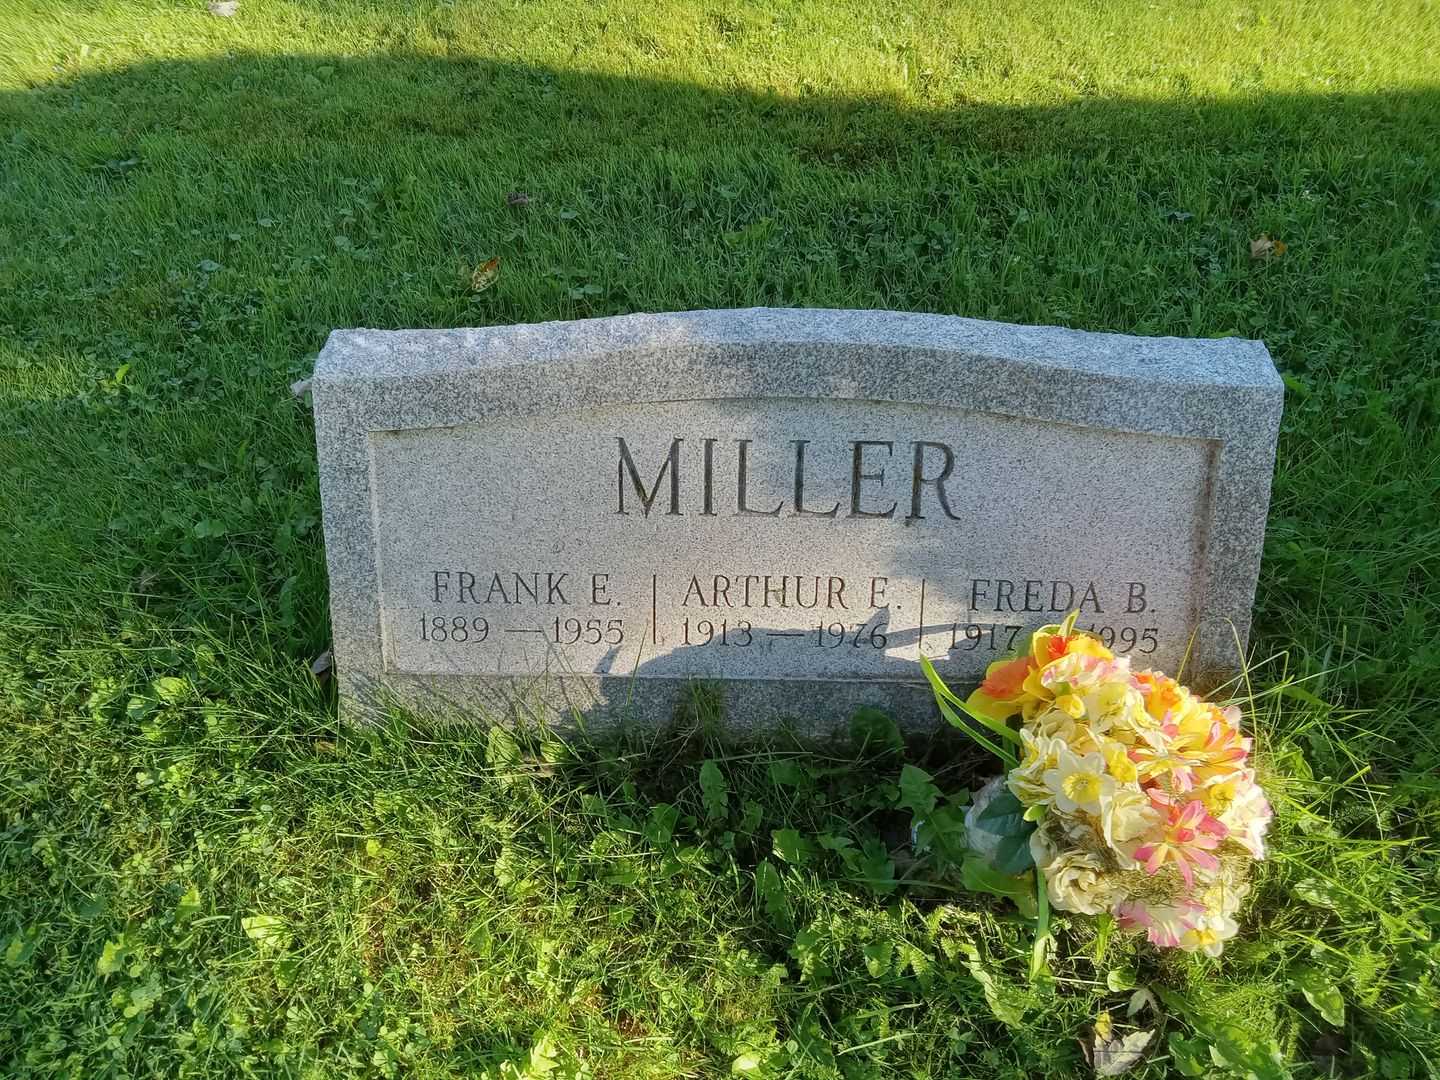 Freda B. Miller's grave. Photo 1